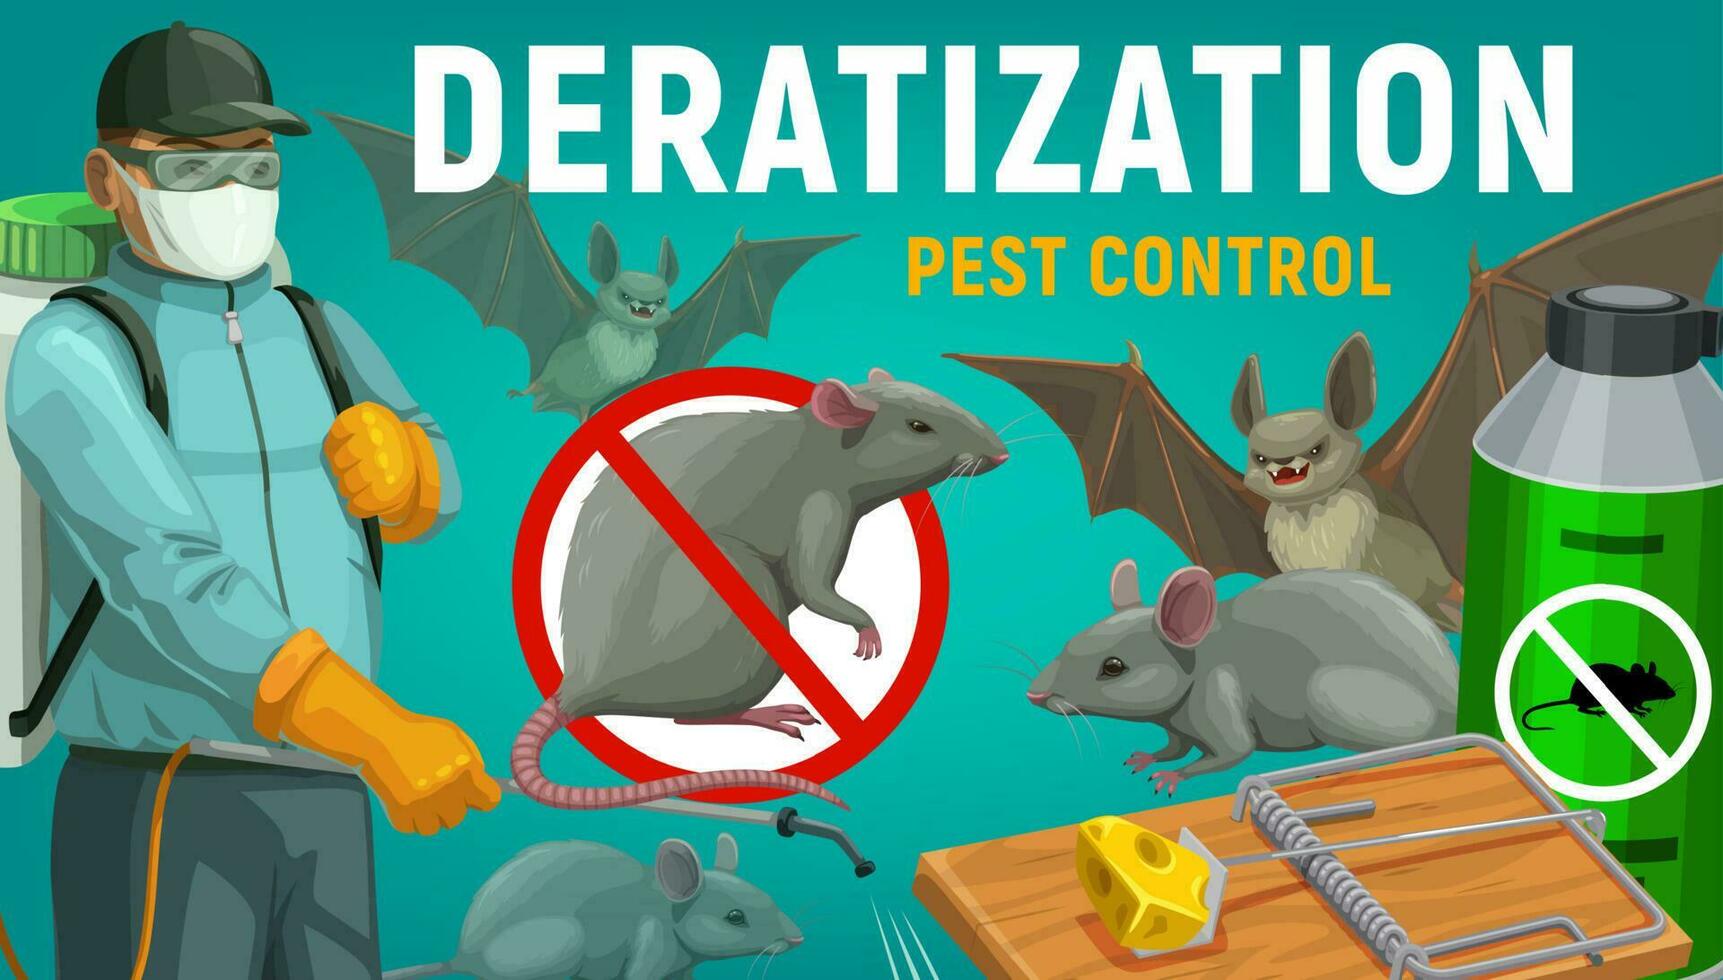 Deratization pest control, extermination service vector